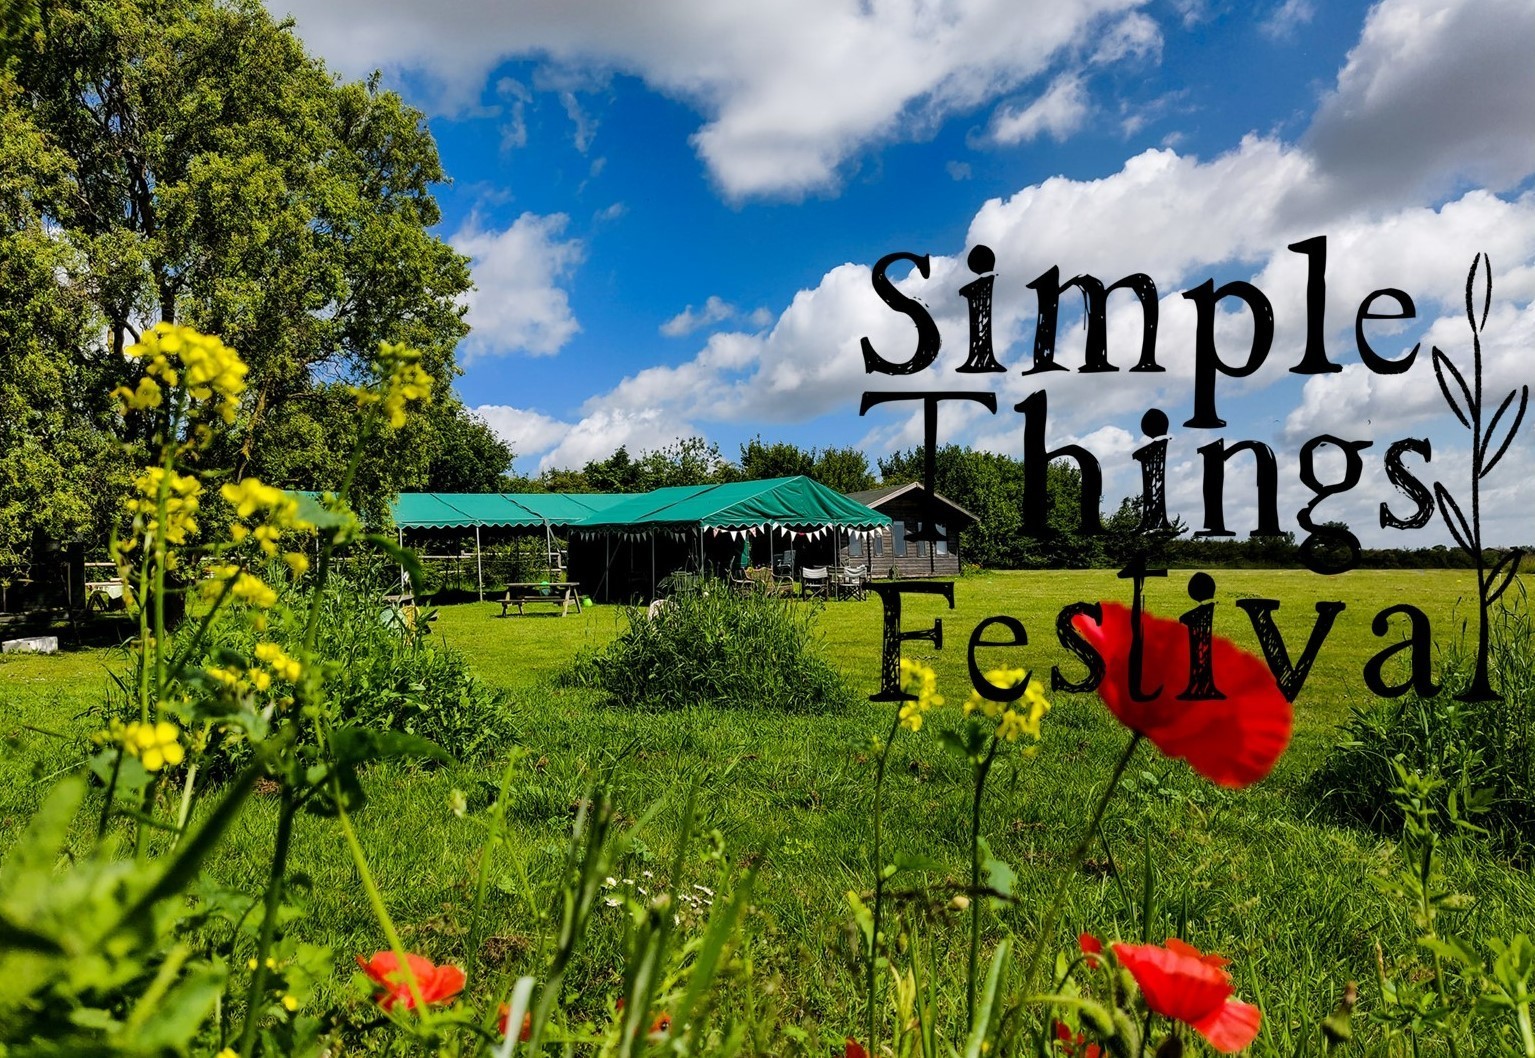 Simple Things Festival, Harwich, England, United Kingdom